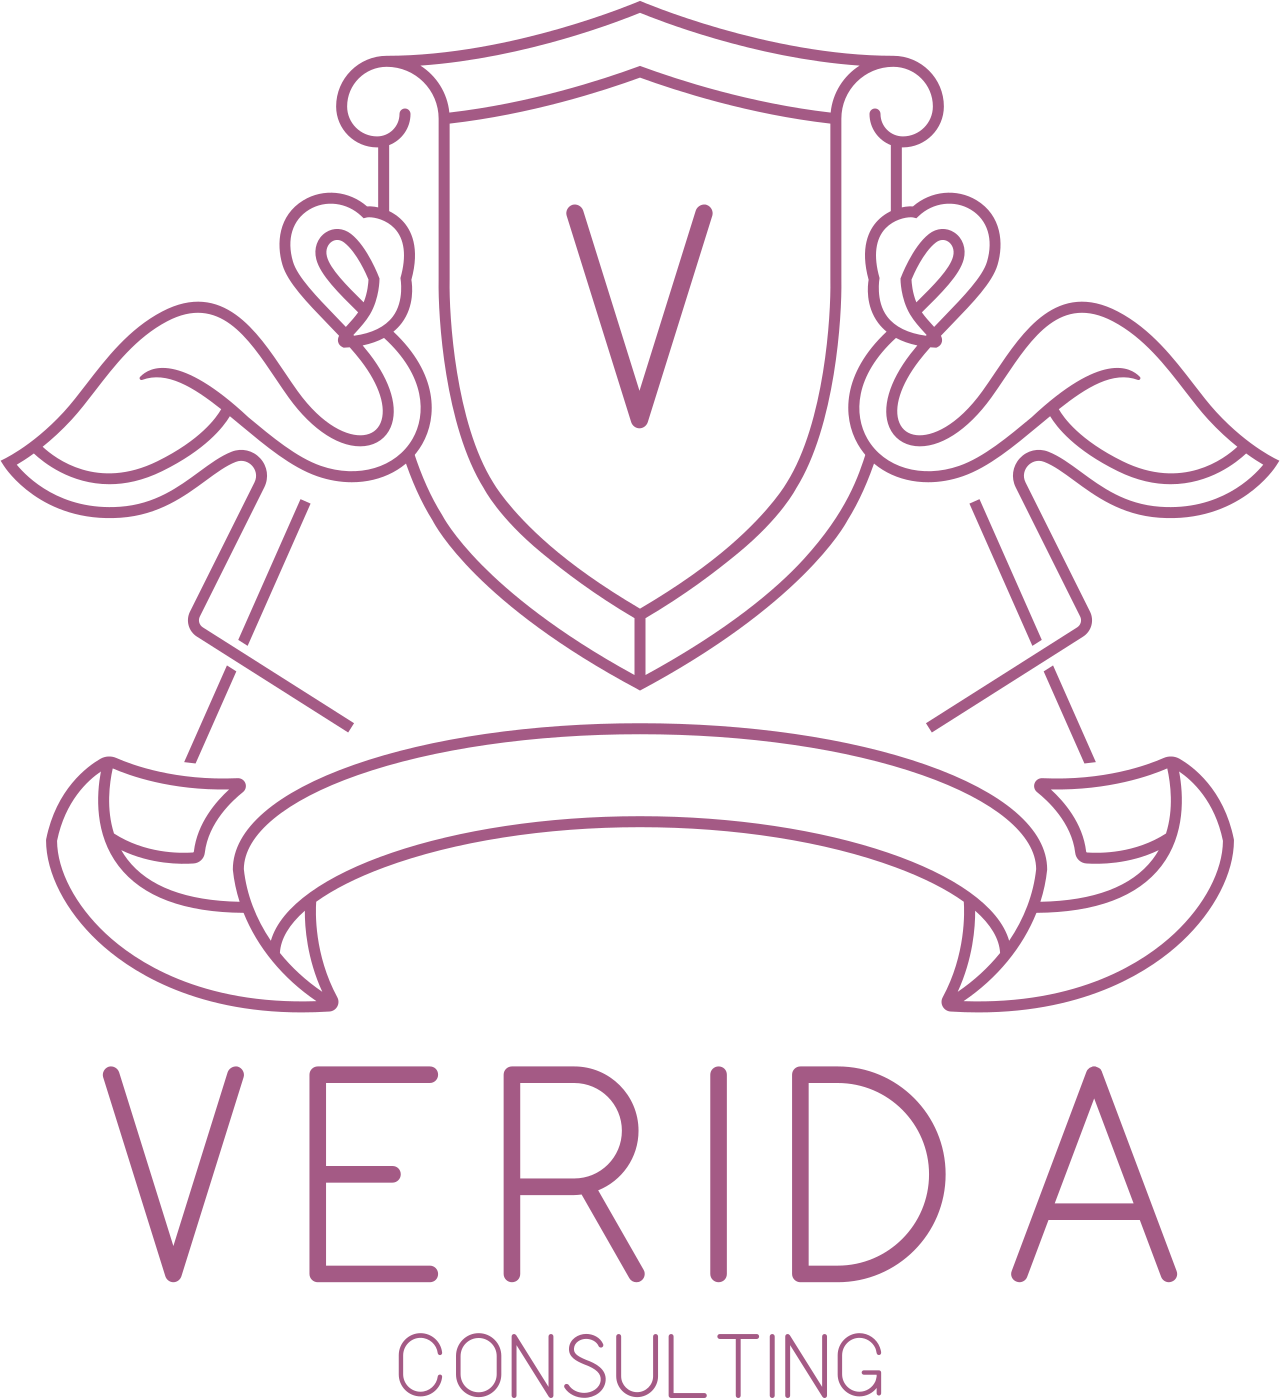 VeriDa's logo